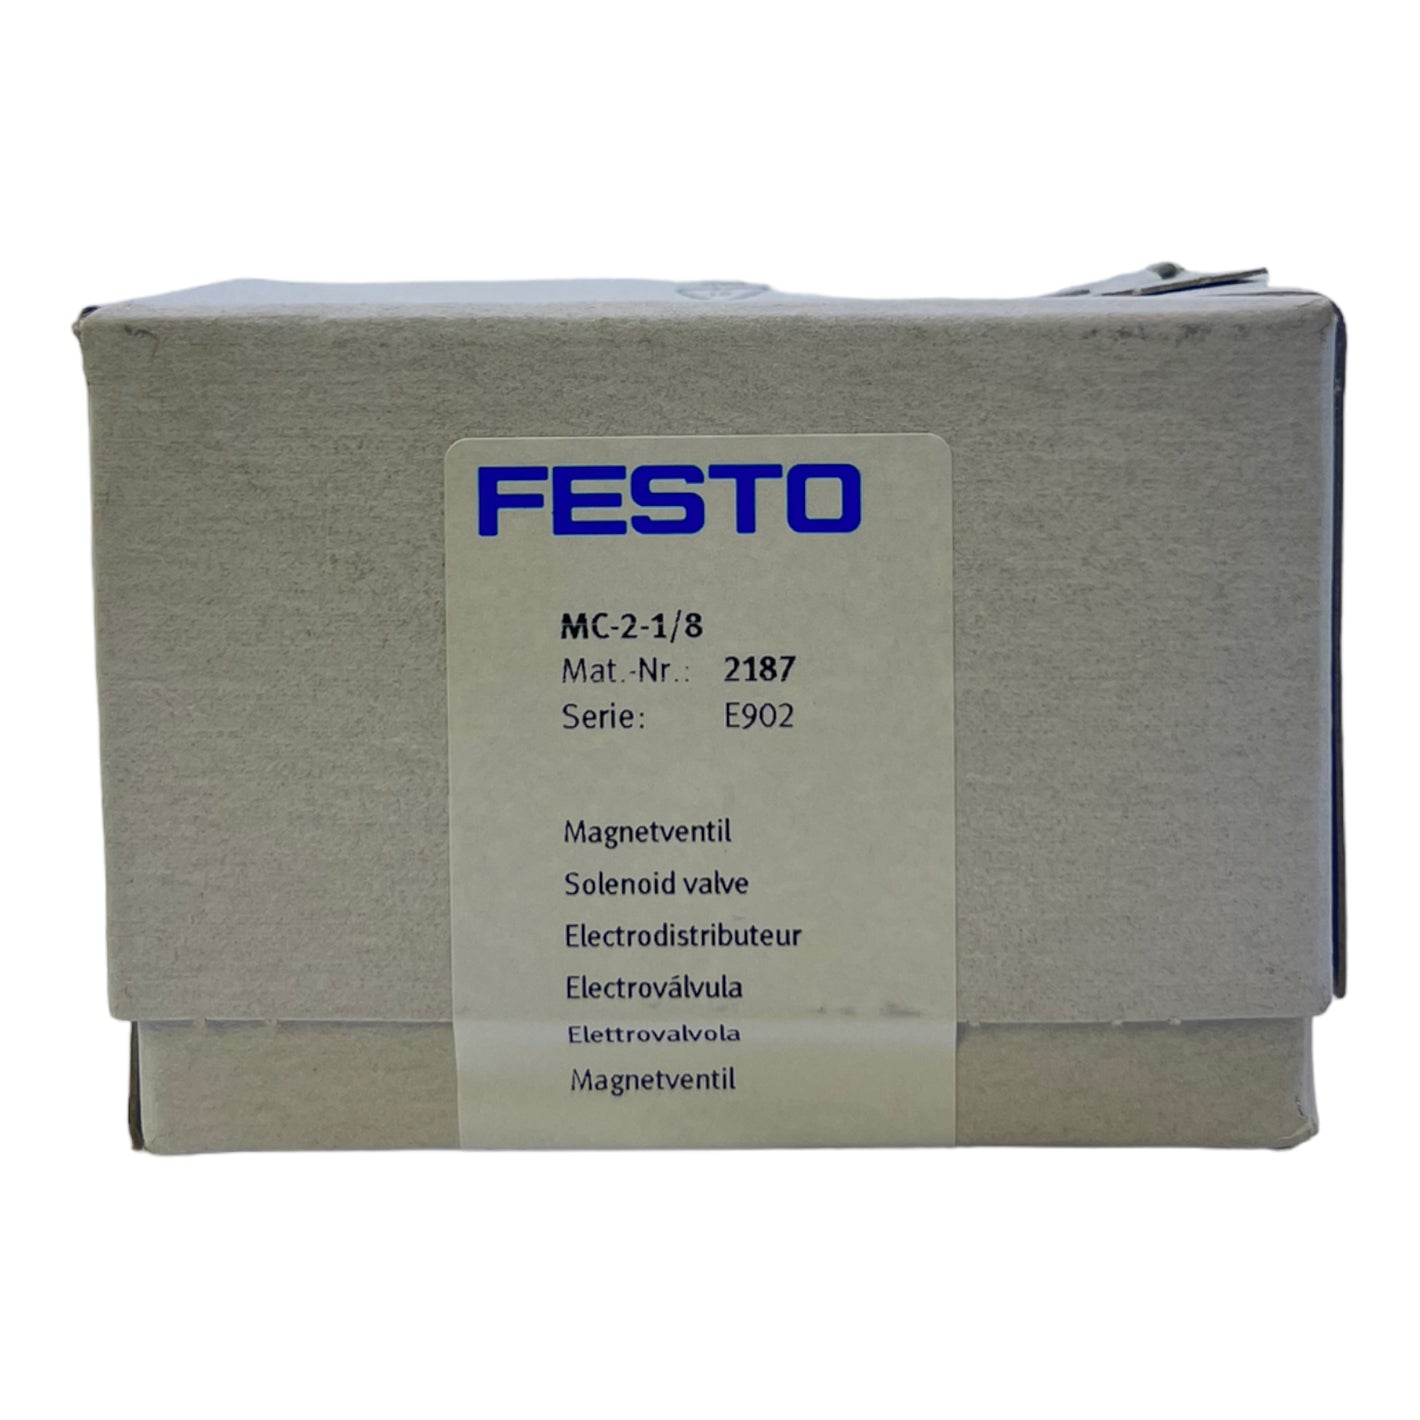 Festo MC-2-1/8 solenoid valve 2187 pneumatic electric -0.95 to 7bar IP65 